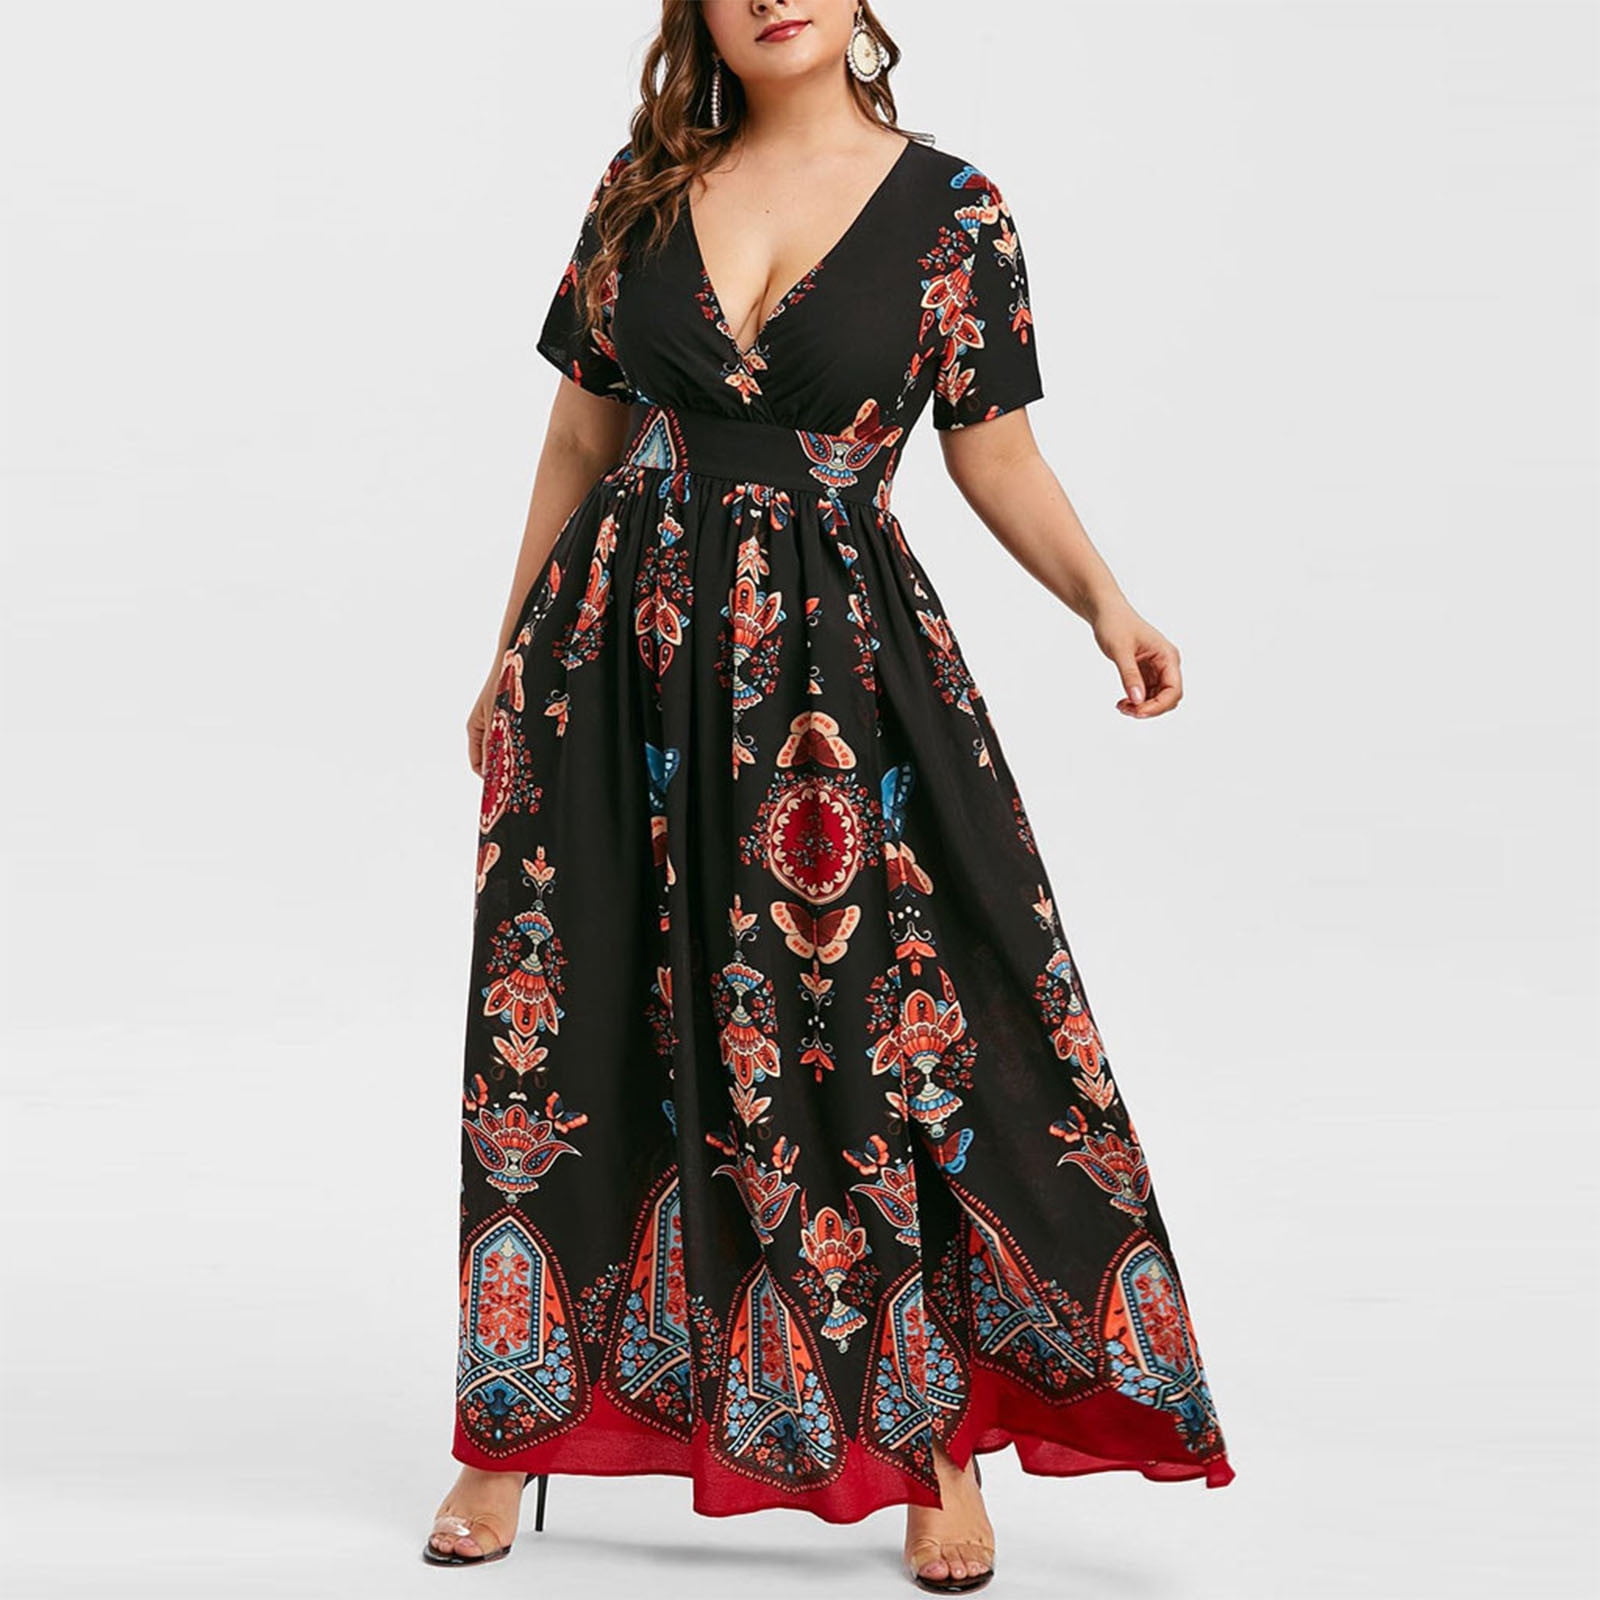 Deep V-Neck Split Wrap Around Dress Bohemian Chic Long Sleeve All Sizes Plus Sizes